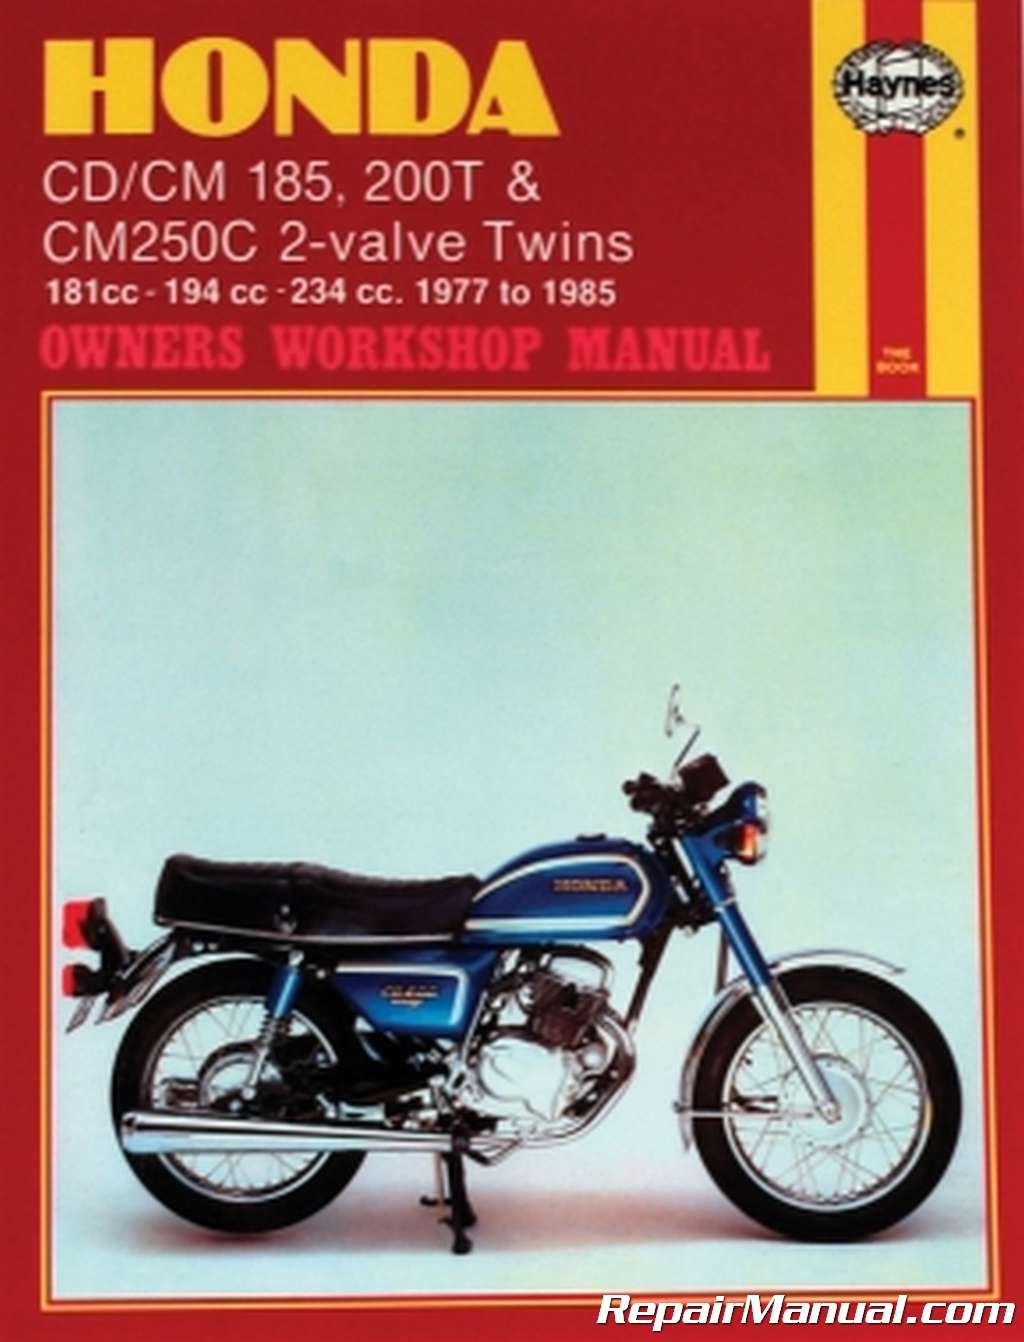 Manual Haynes for 1977 Honda CB 200 B Twin 